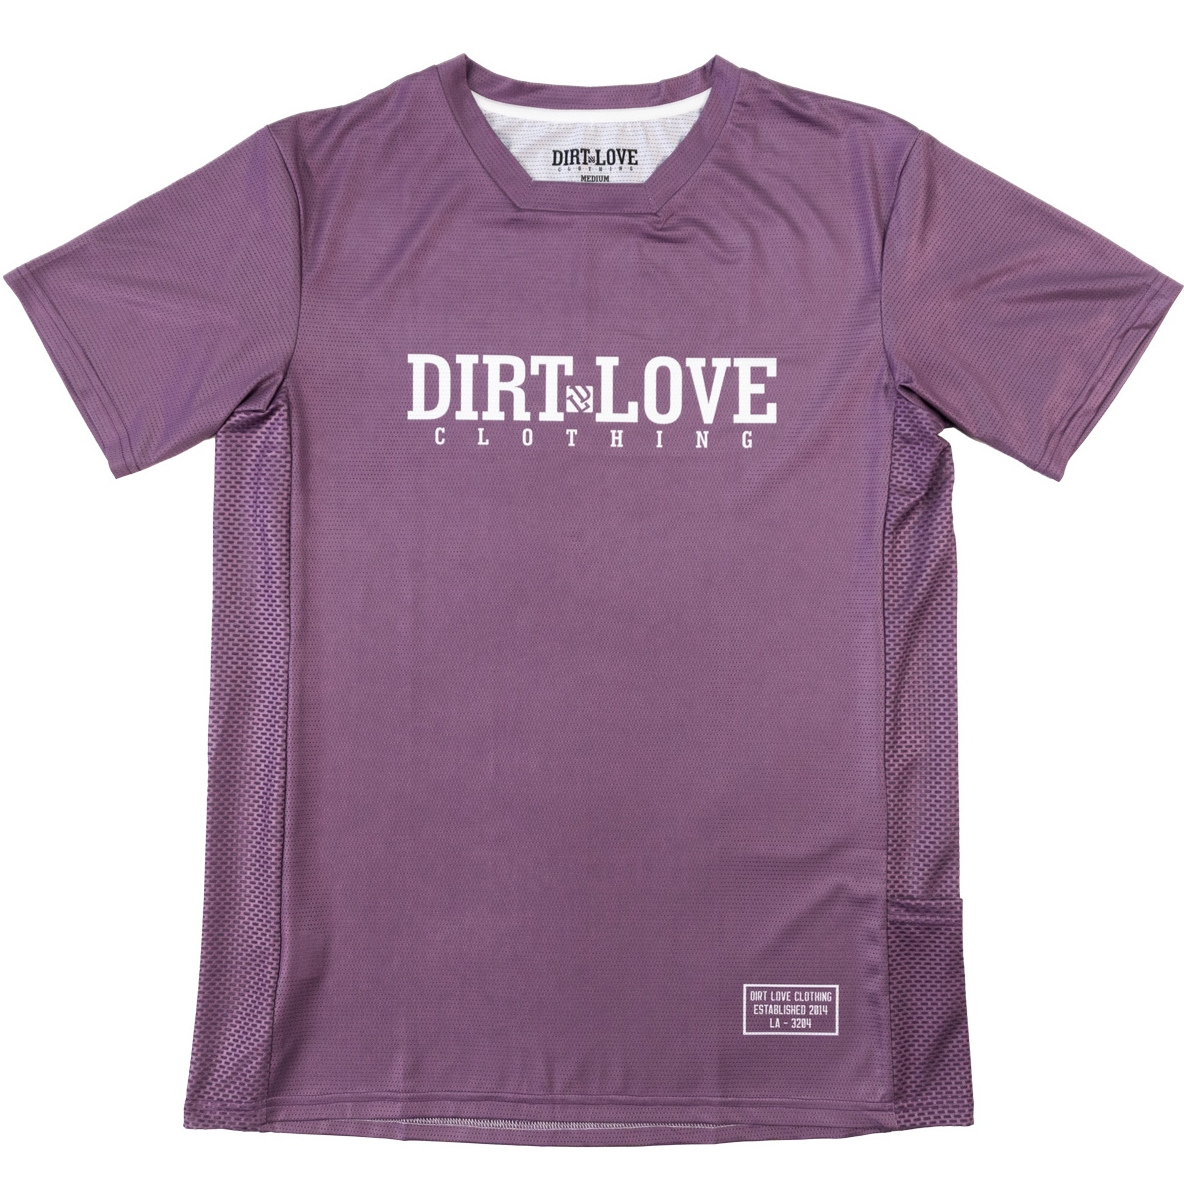 Productfoto van Dirt Love Recycled Polyester MTB Shirt - lilac